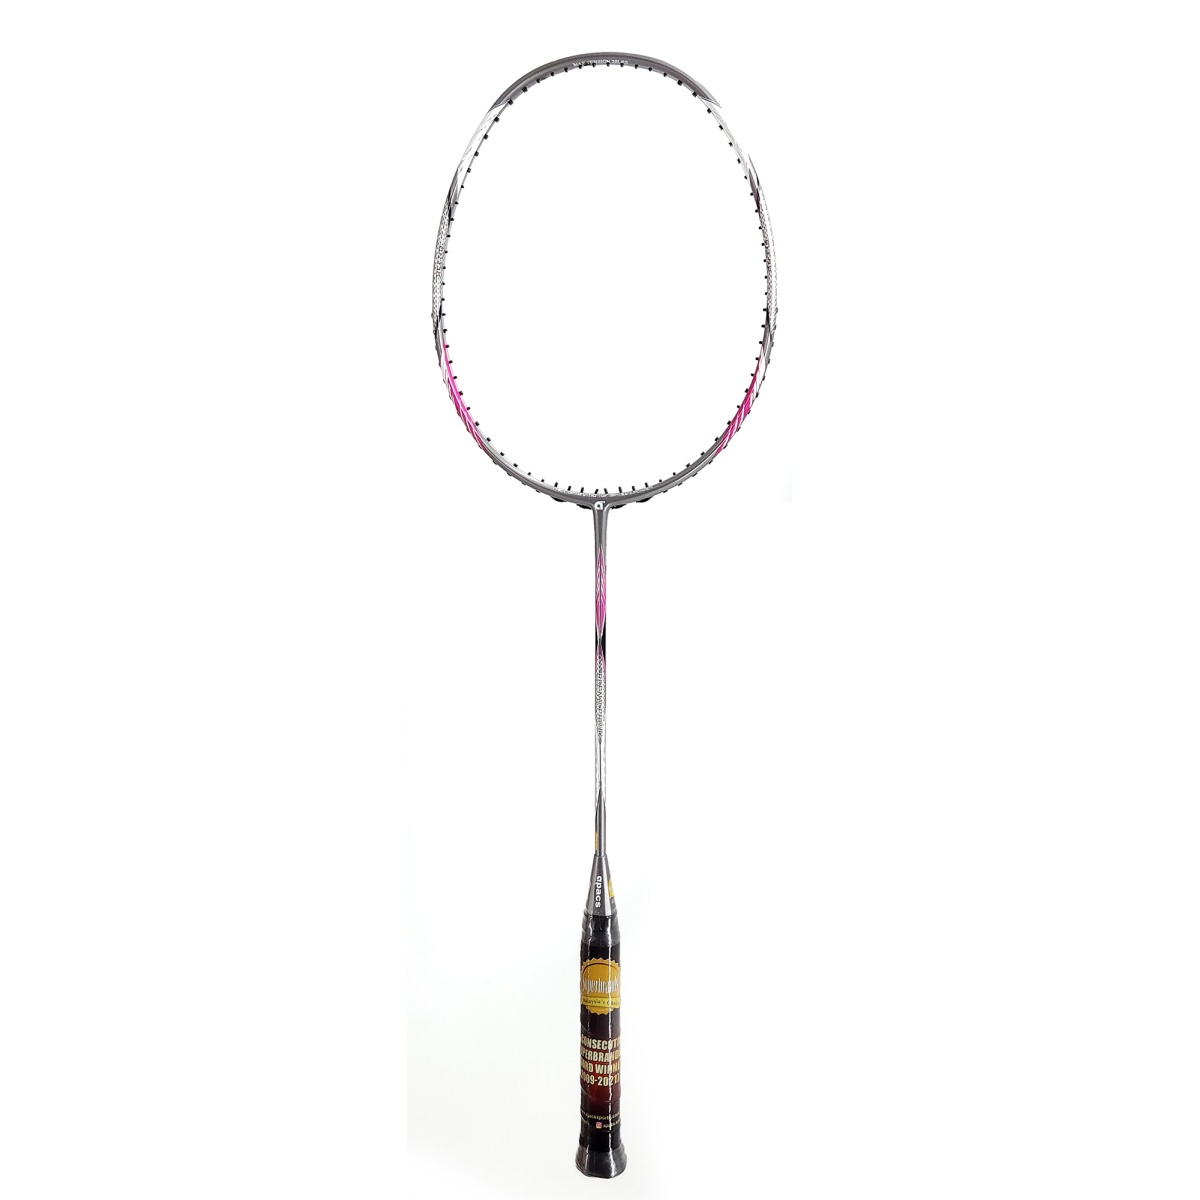 Buy Apacs Blend Pro II Badminton Racket